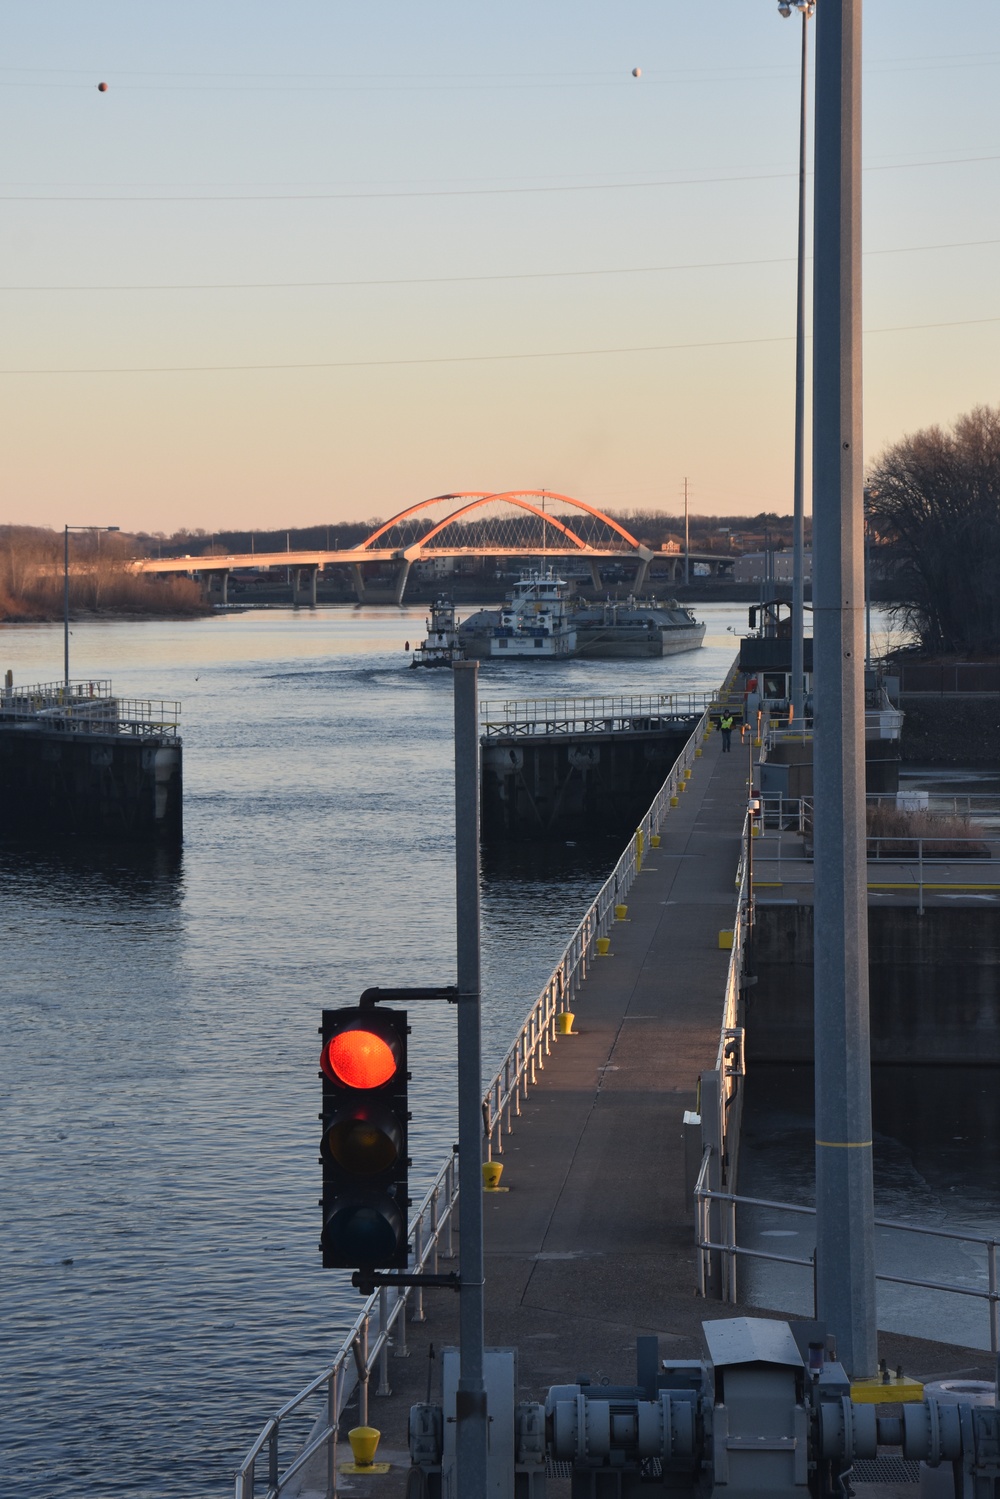 Upper Mississippi River 2020 navigation season comes to an end